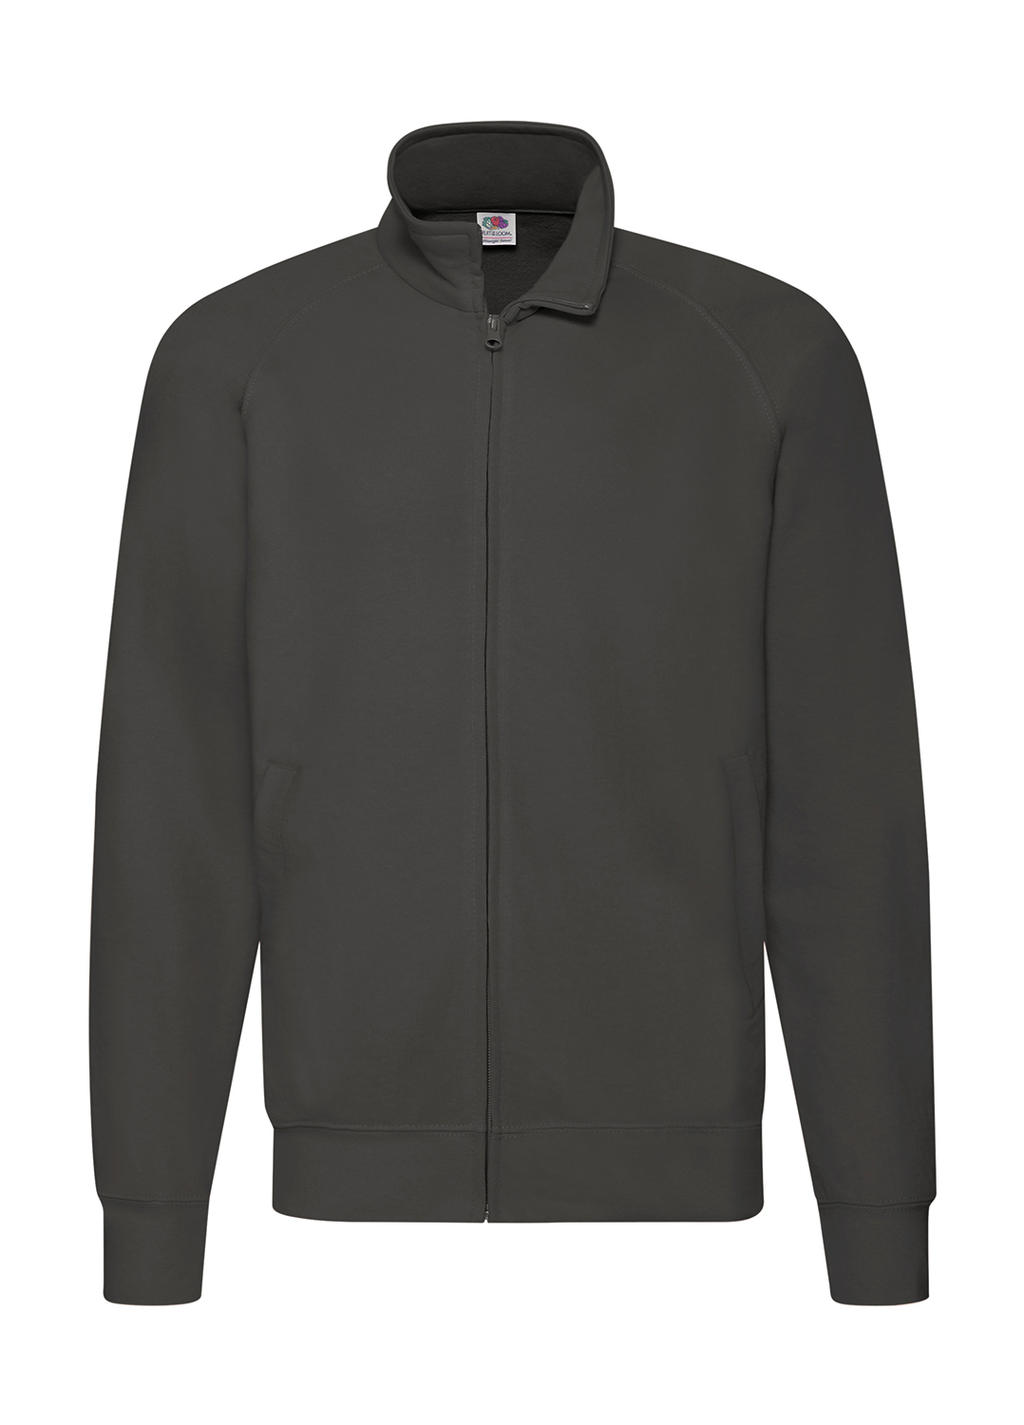  Lightweight Sweat Jacket in Farbe Light Graphite